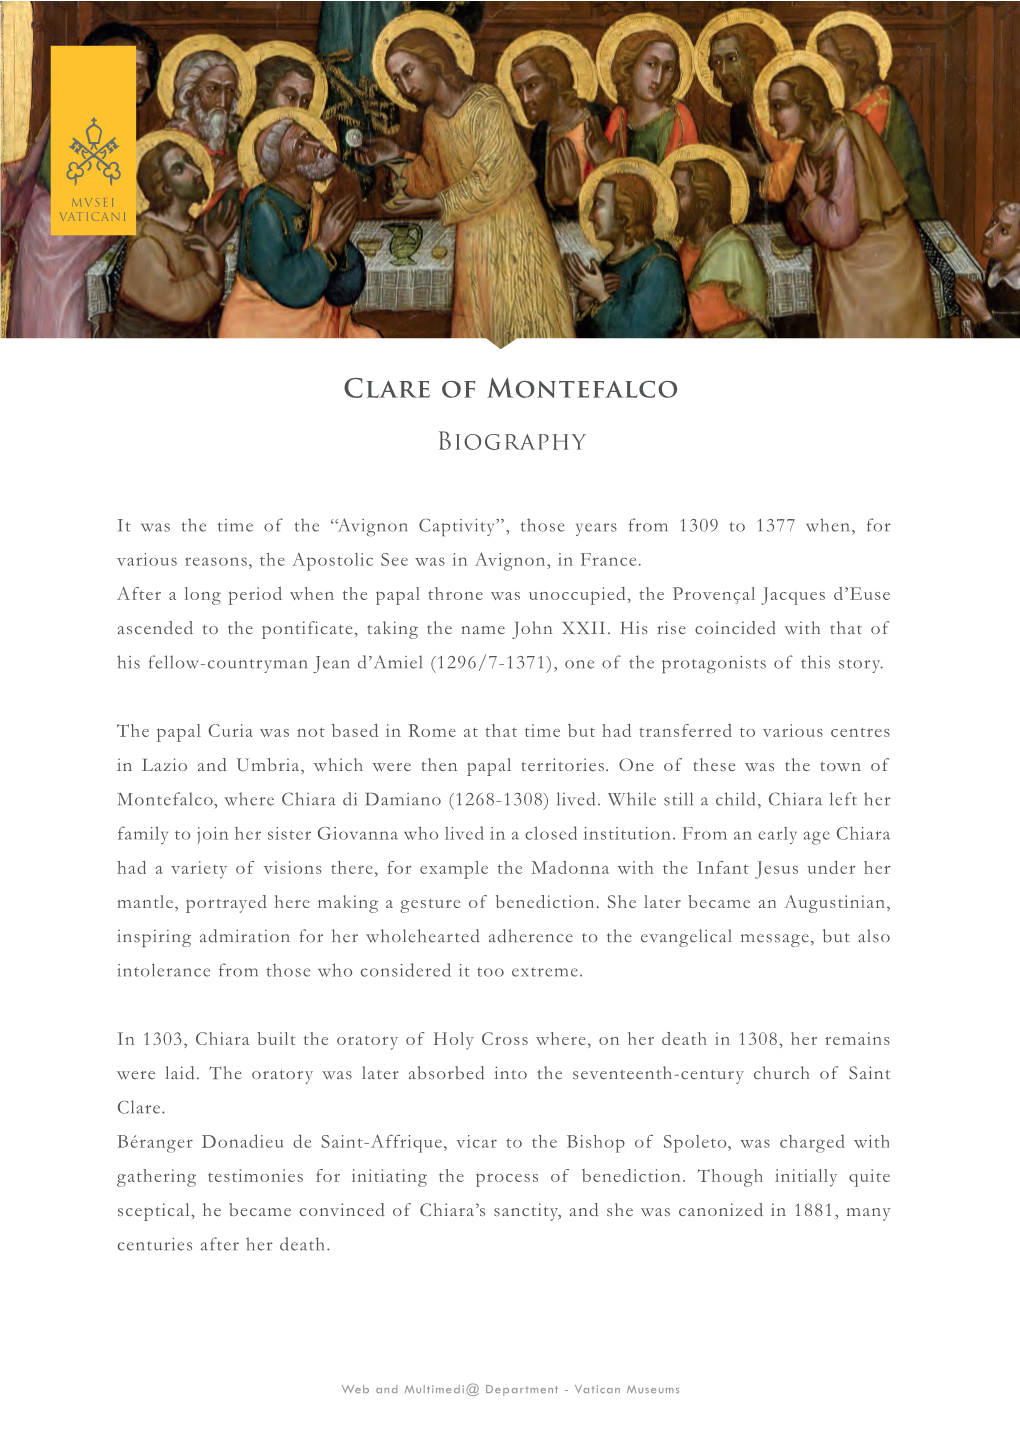 Clare of Montefalco